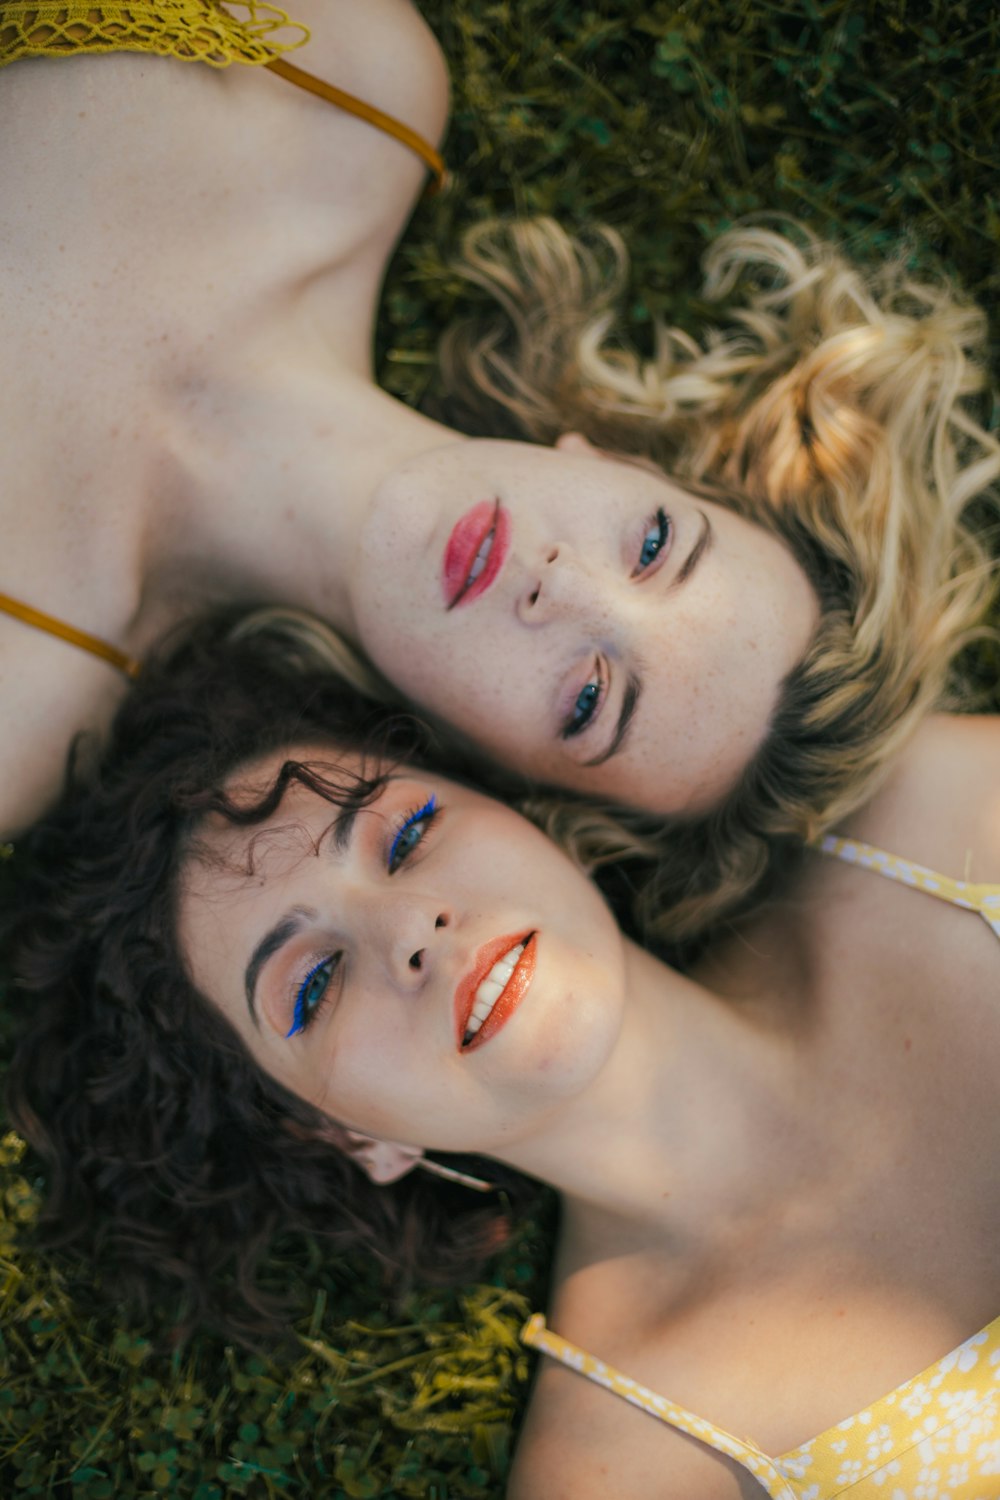 2 women wearing yellow string strap top lying on grassland